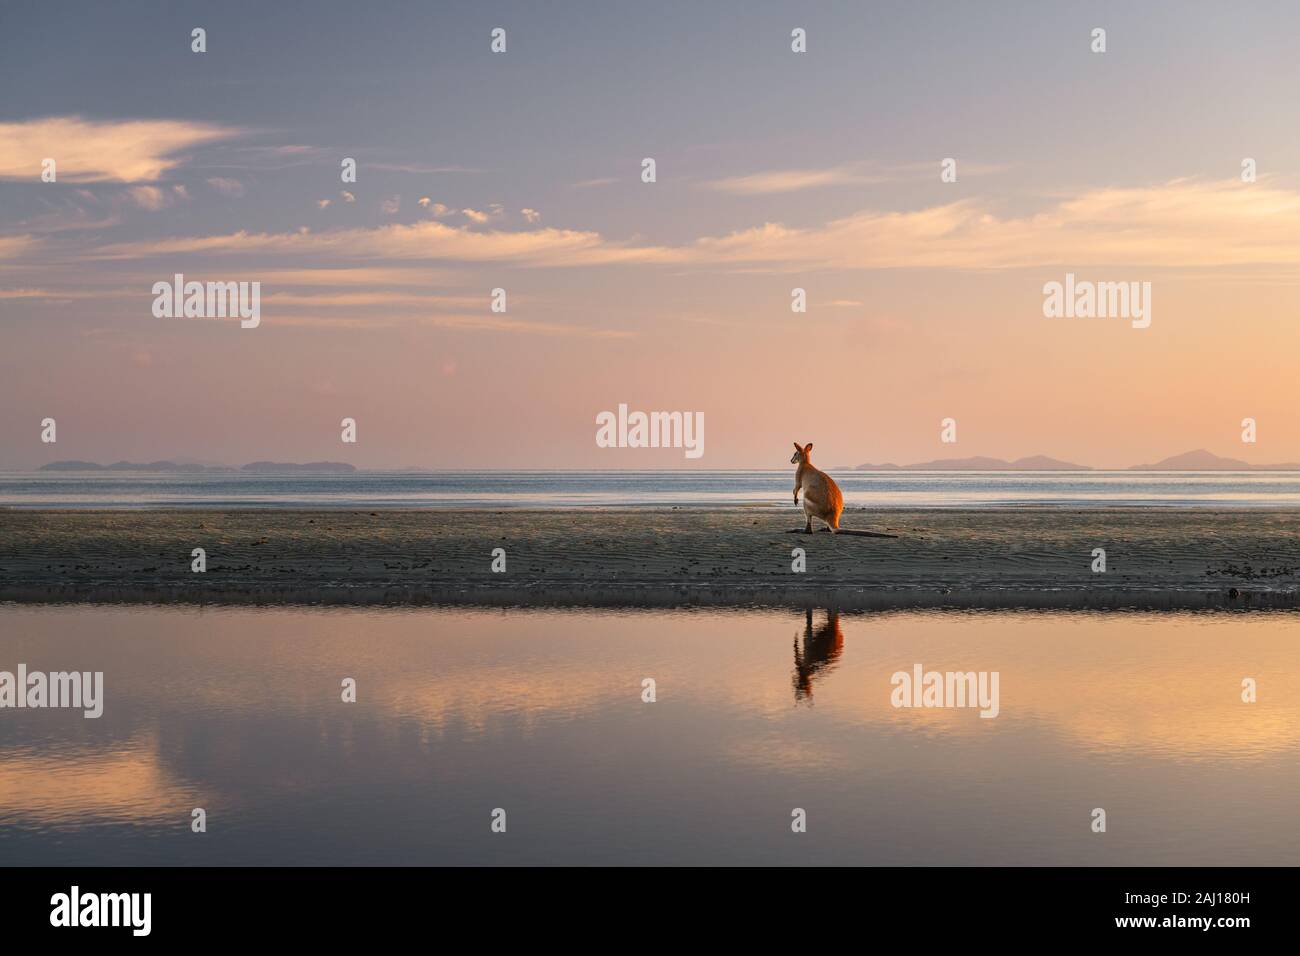 Agile Wallaby at sunrise on the beach. Stock Photo